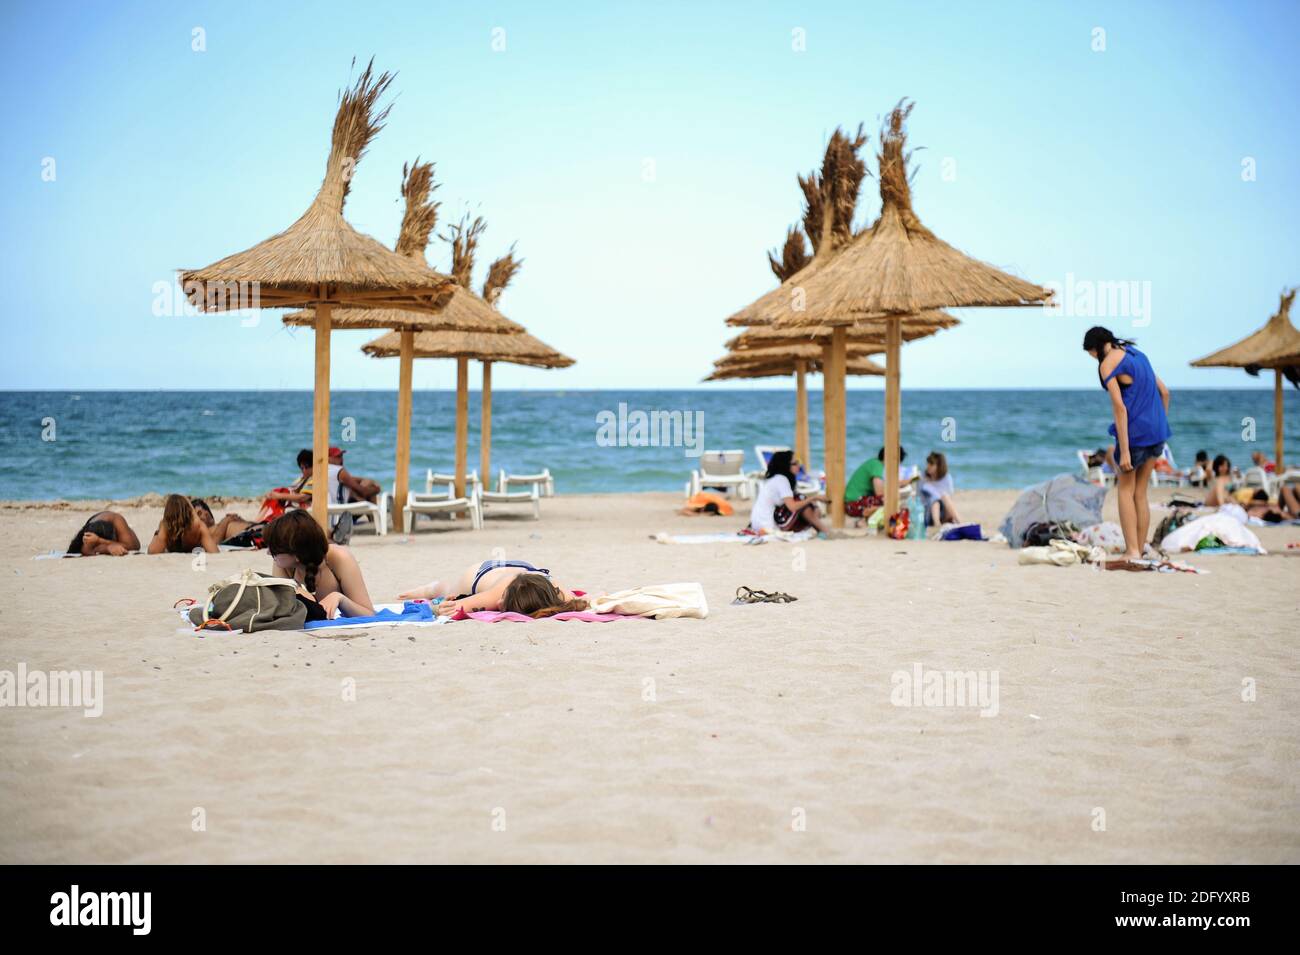 Vama Veche, Romania - June 29, 2012: People enjoy the sun and sand on a beach from the Black Sea resort of Vama Veche. Stock Photo